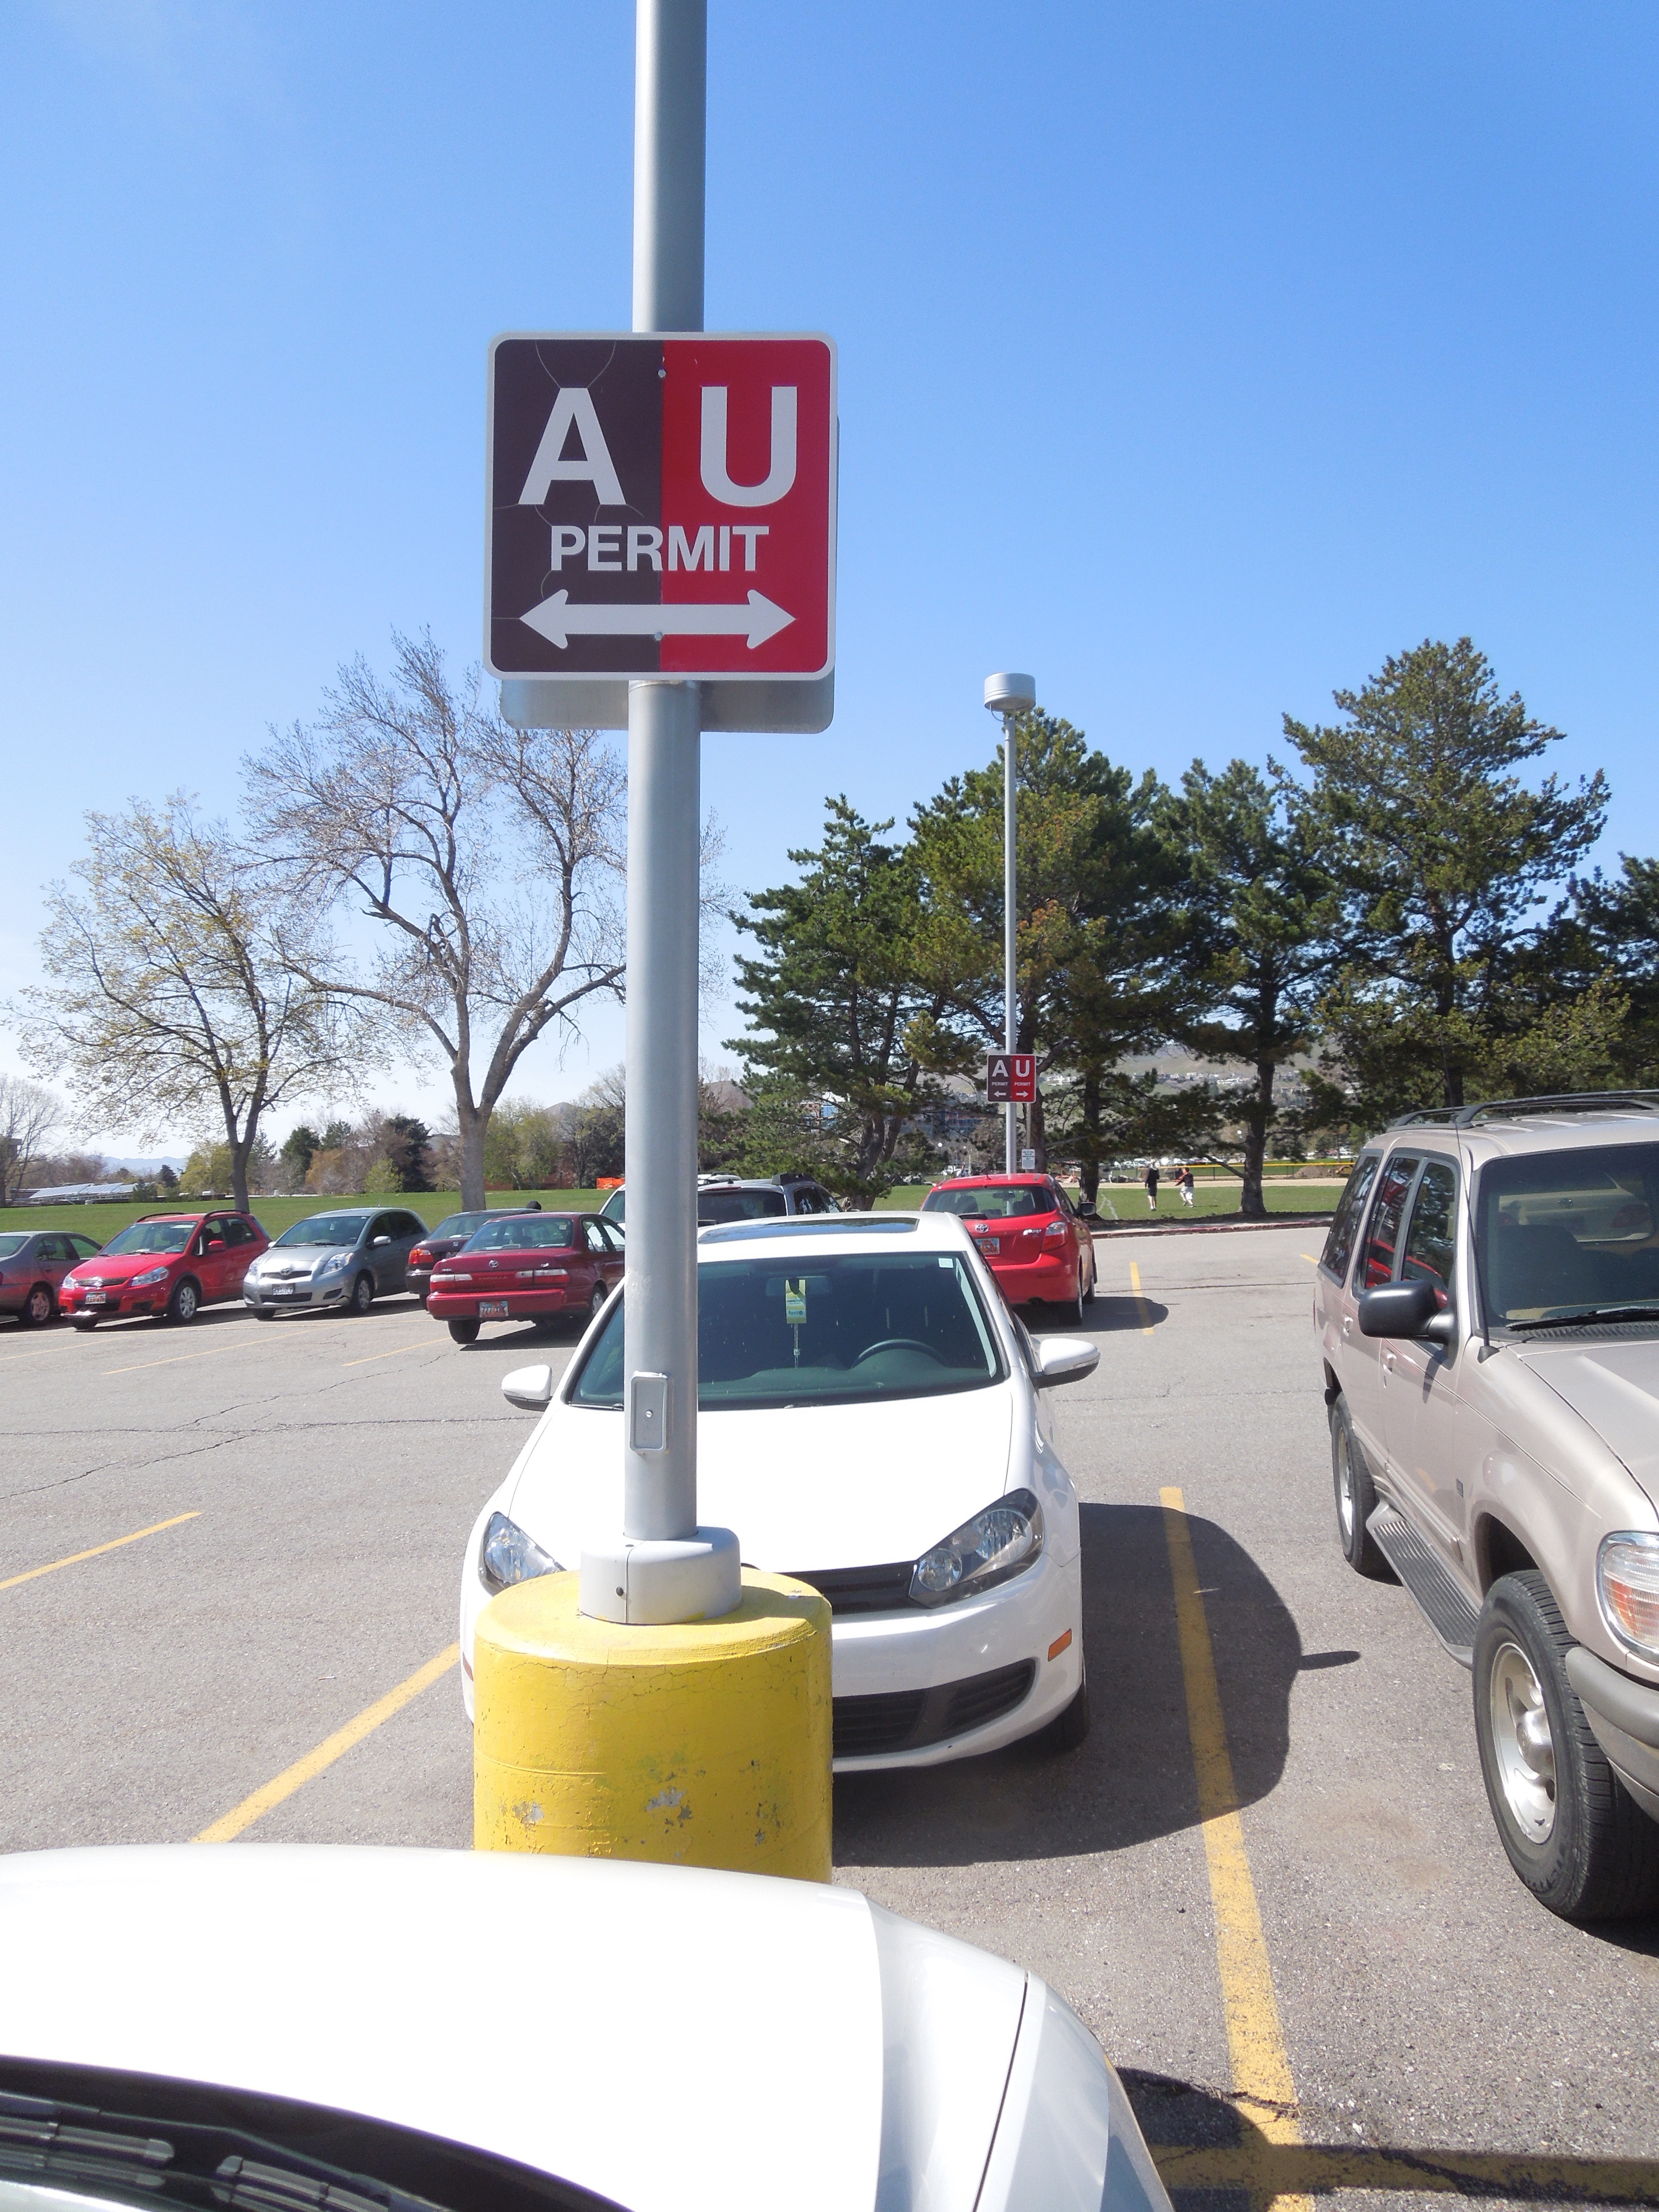 Amaze parking spot last day of school april 23, 2013